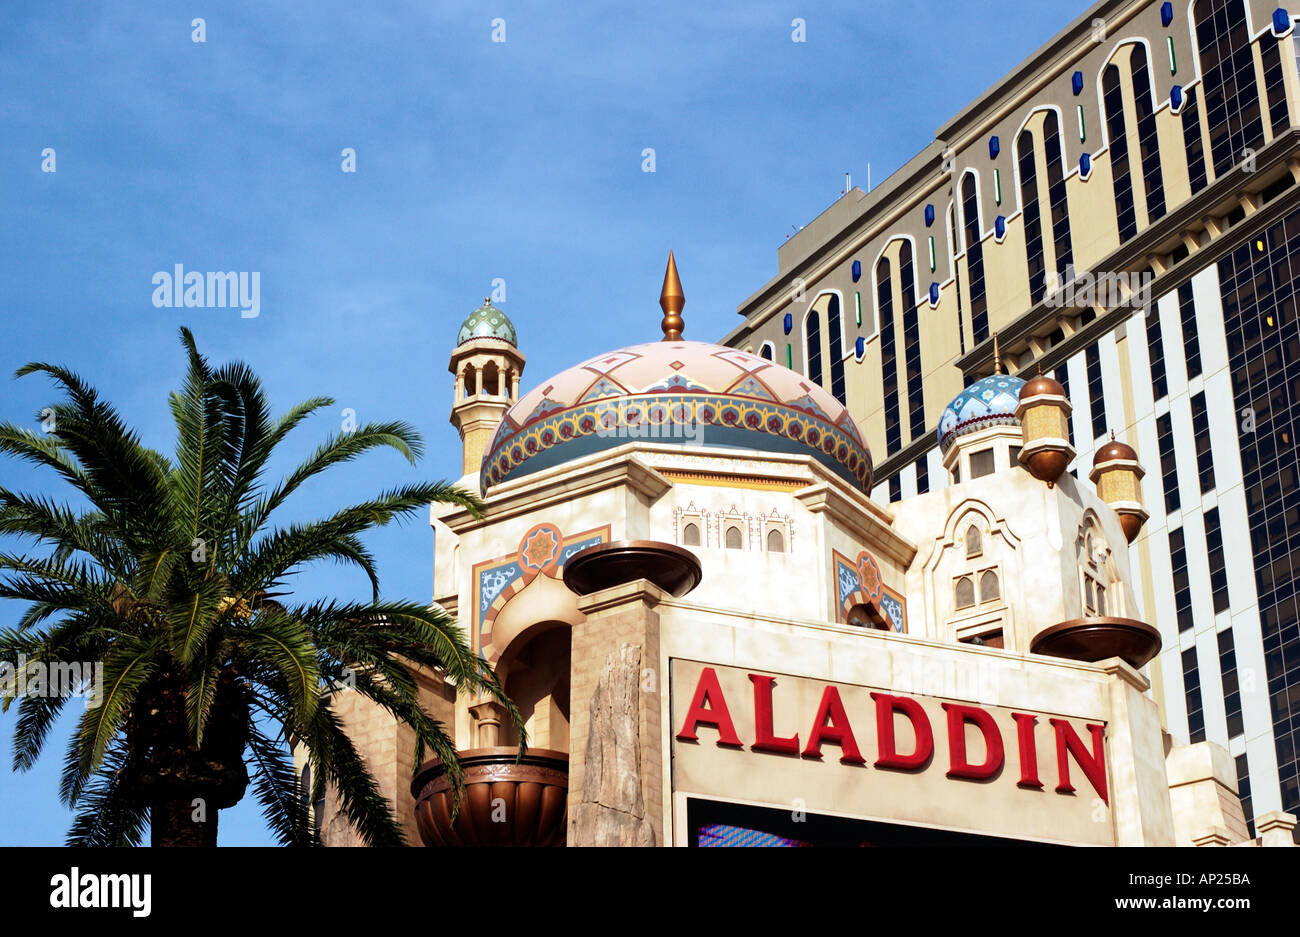 Paris Casino and Aladdin Hotels, Las Vegas, Nevada